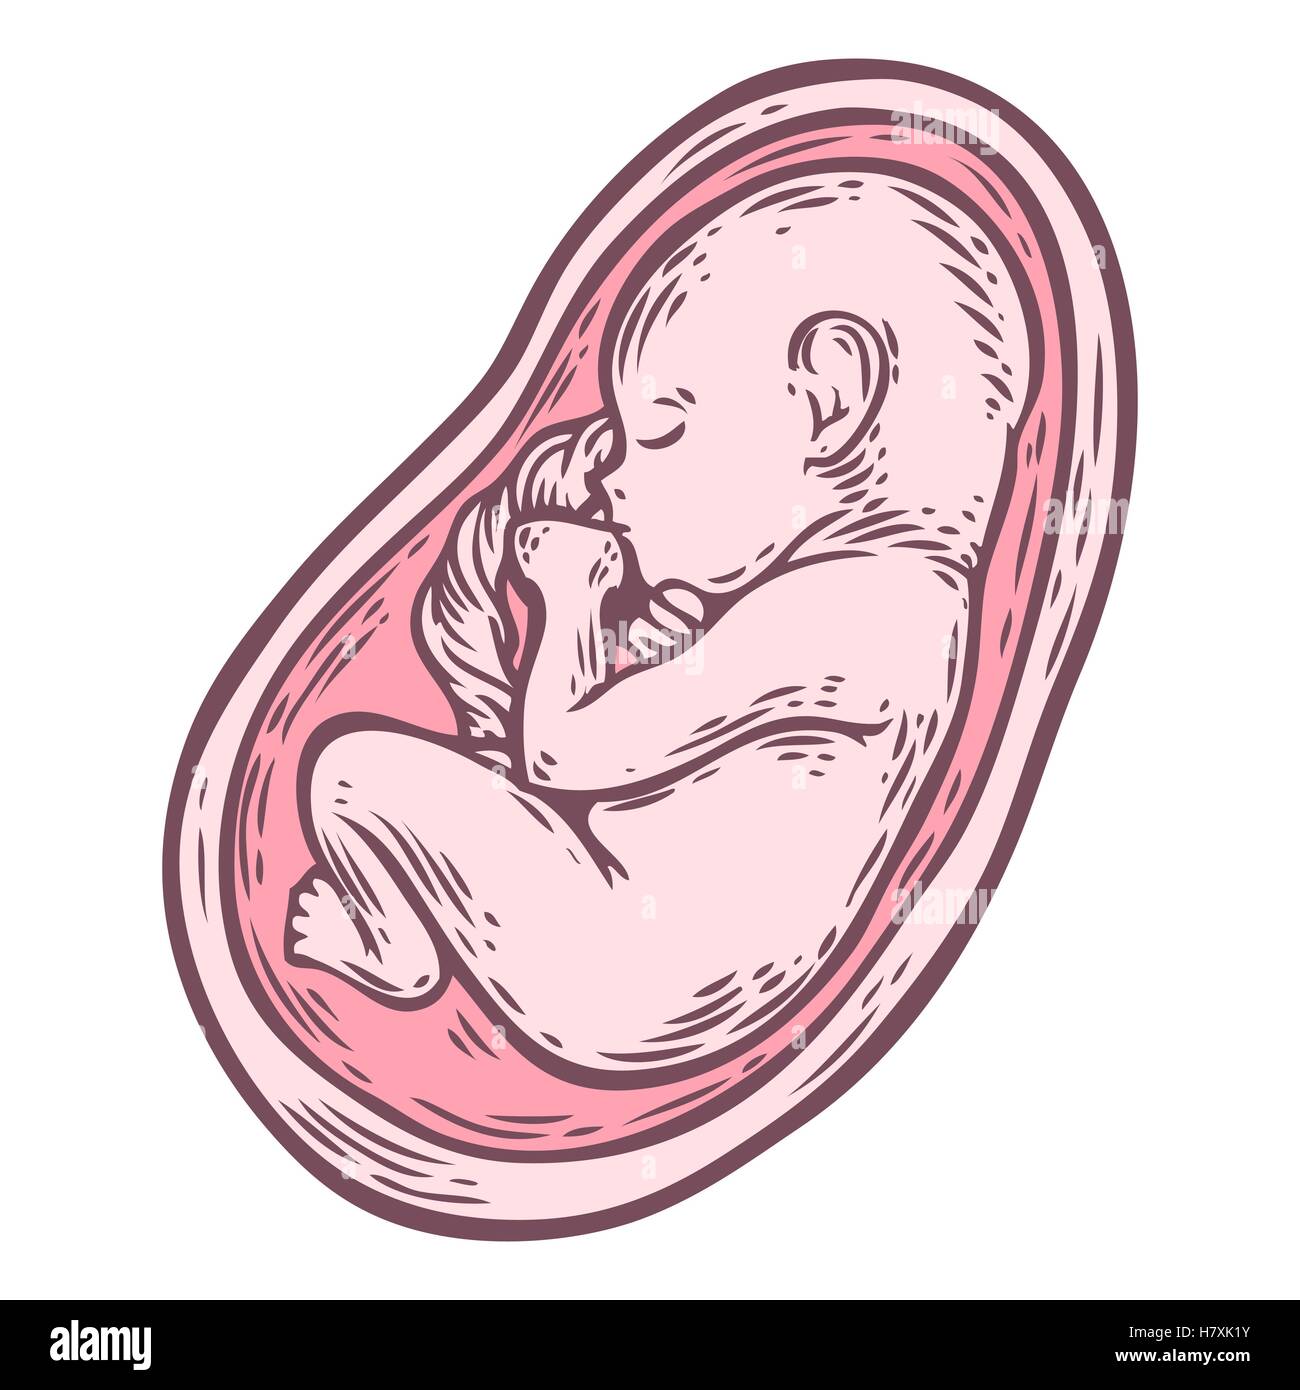 Human fetus concept hand drawn vector illustration ...